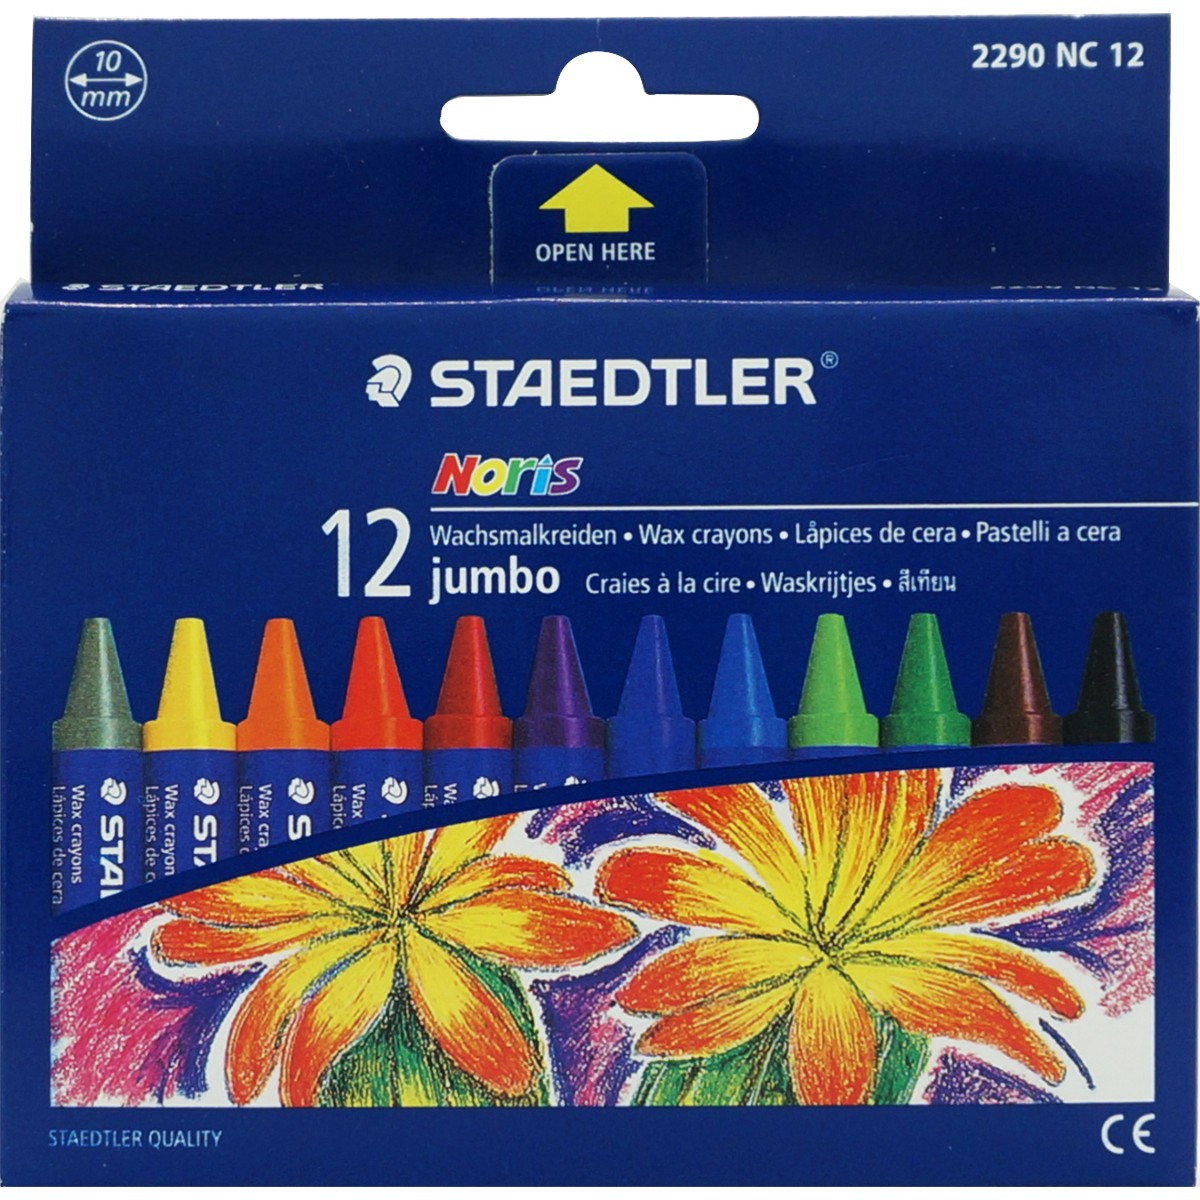 Pack of 8 Staedtler 229 NC8 Noris Club Jumbo Wax Crayon